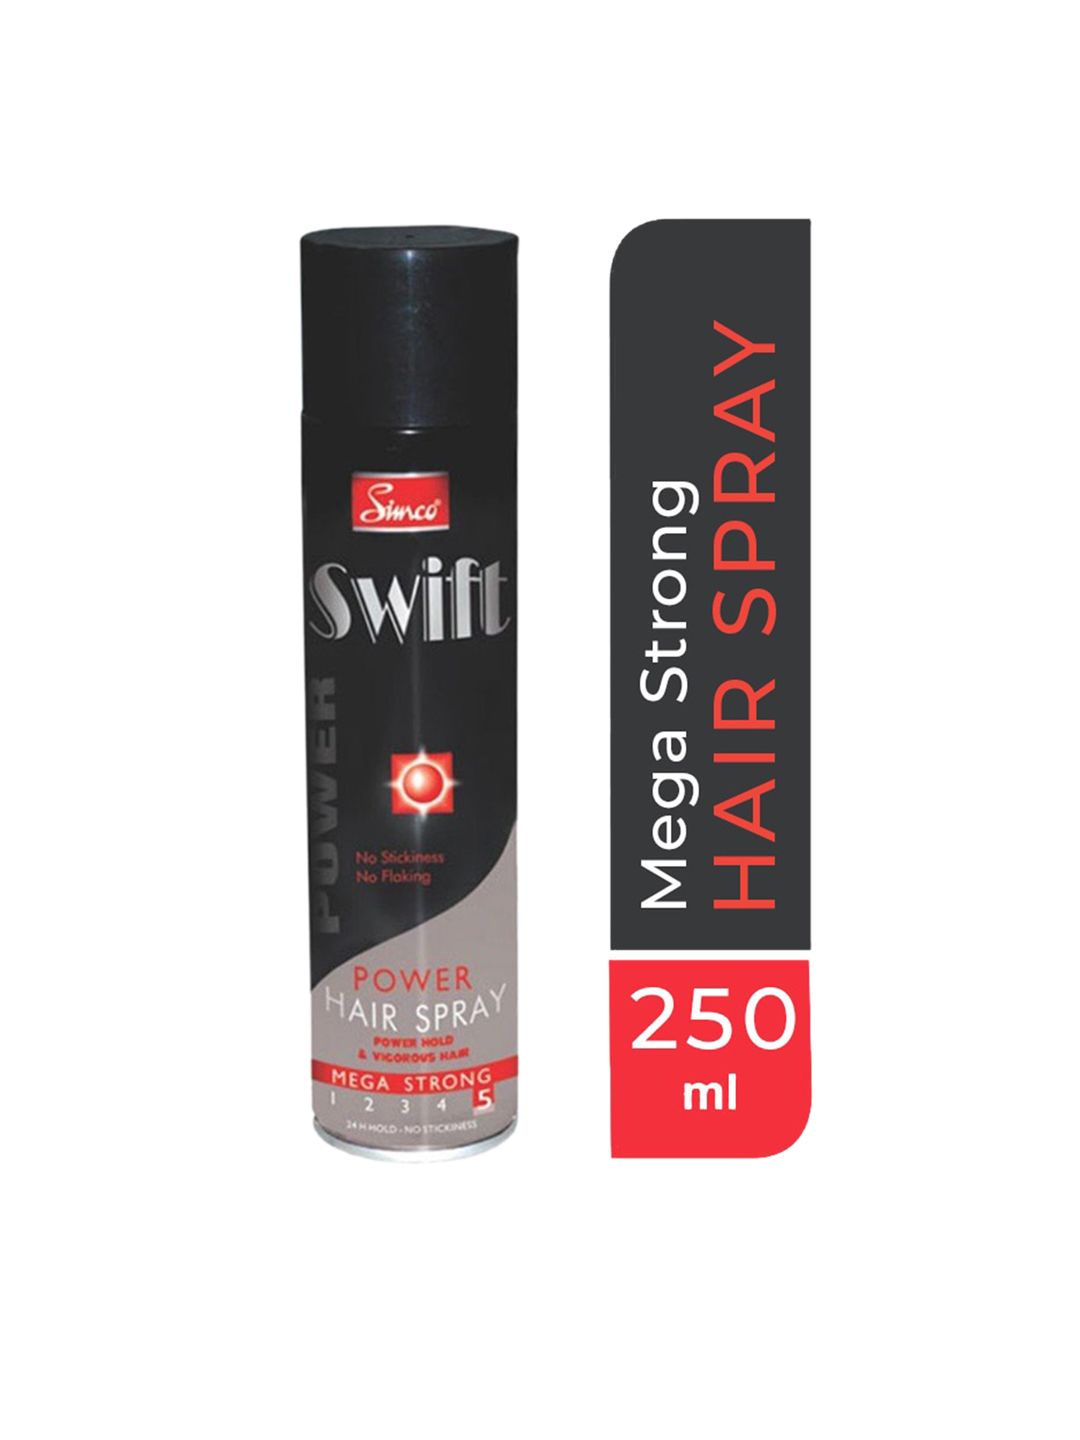 Simco Swift Mega Strong Power Hair Spray 250 ml Price in India